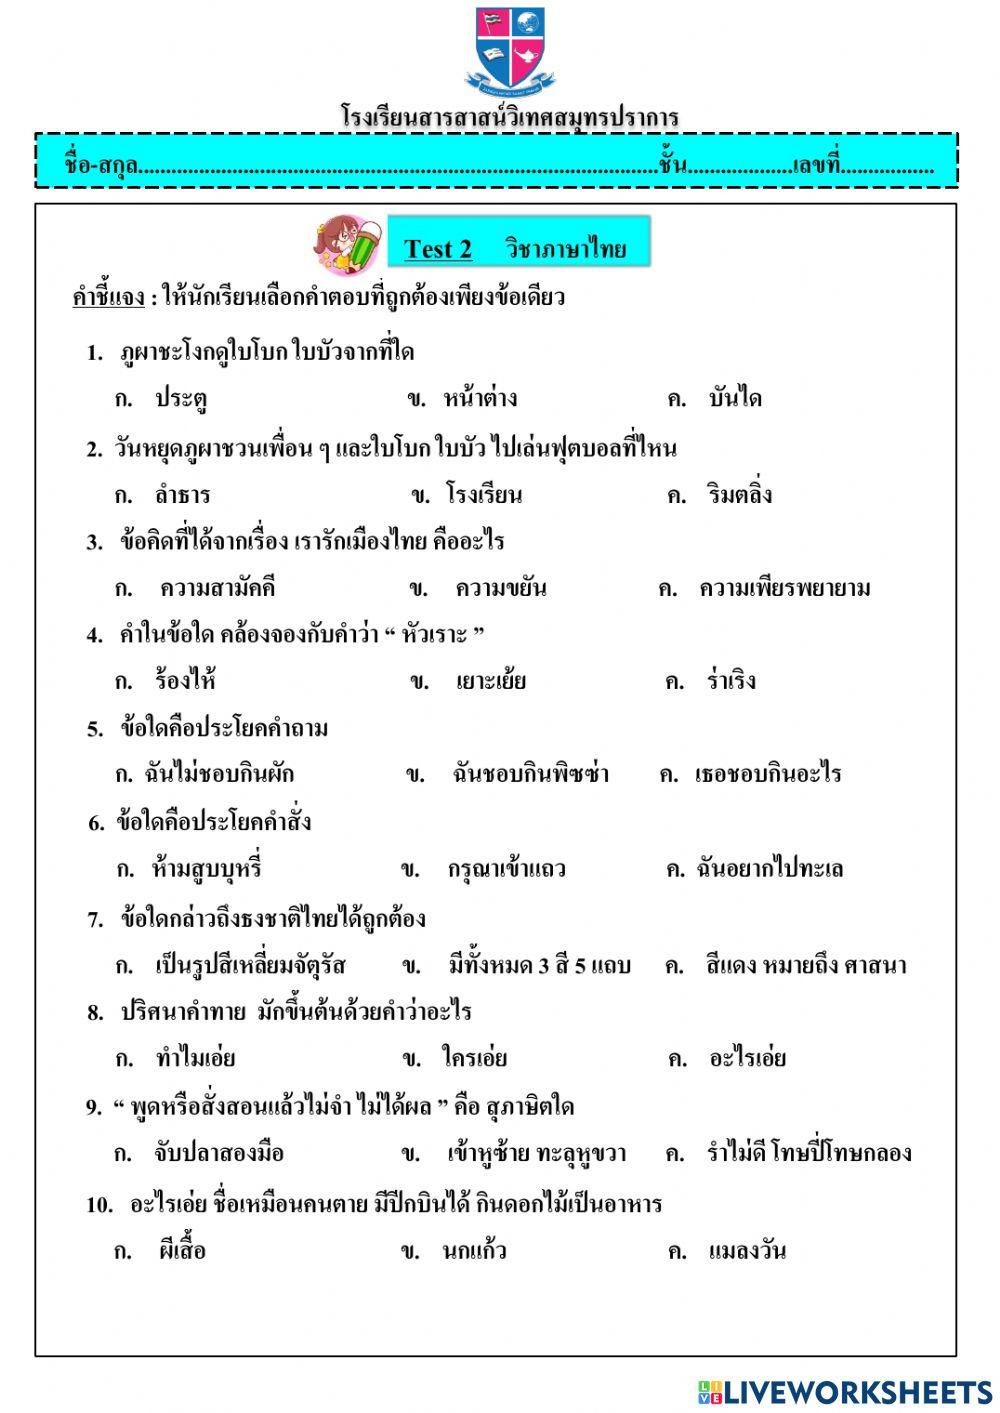 Test 2 ภาษาไทย